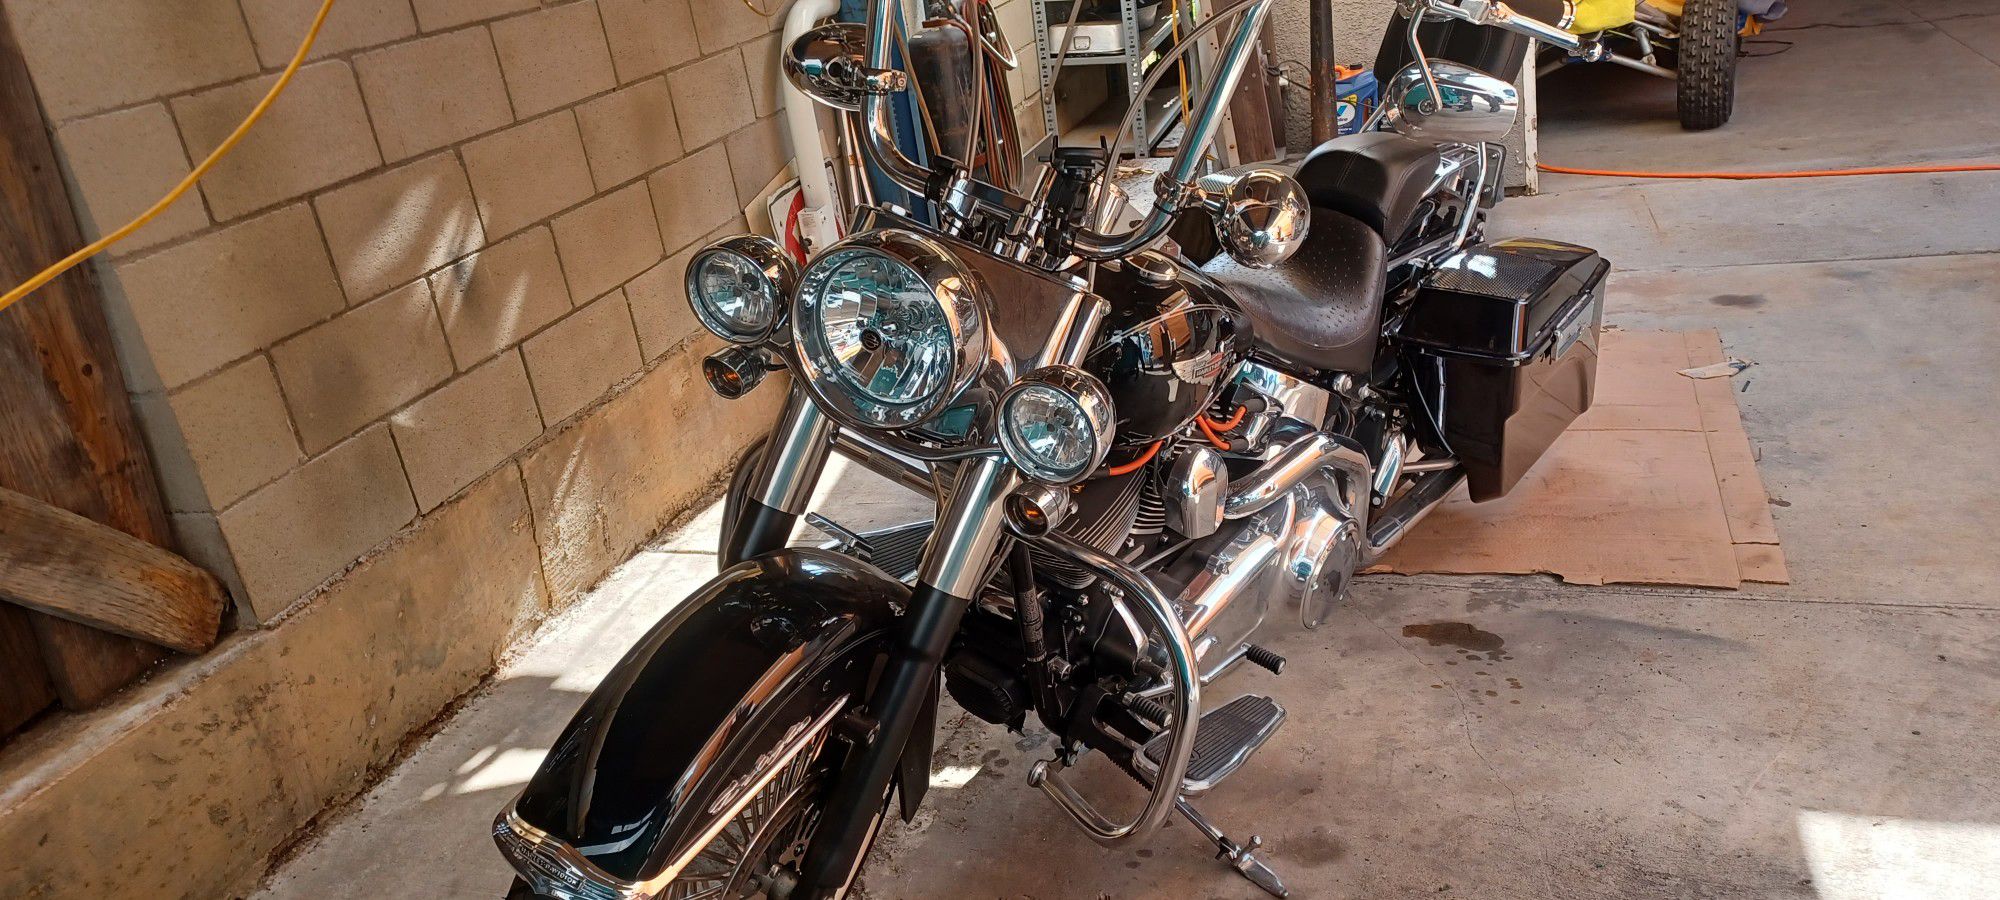 2008 Harley Davidson Delux Softail